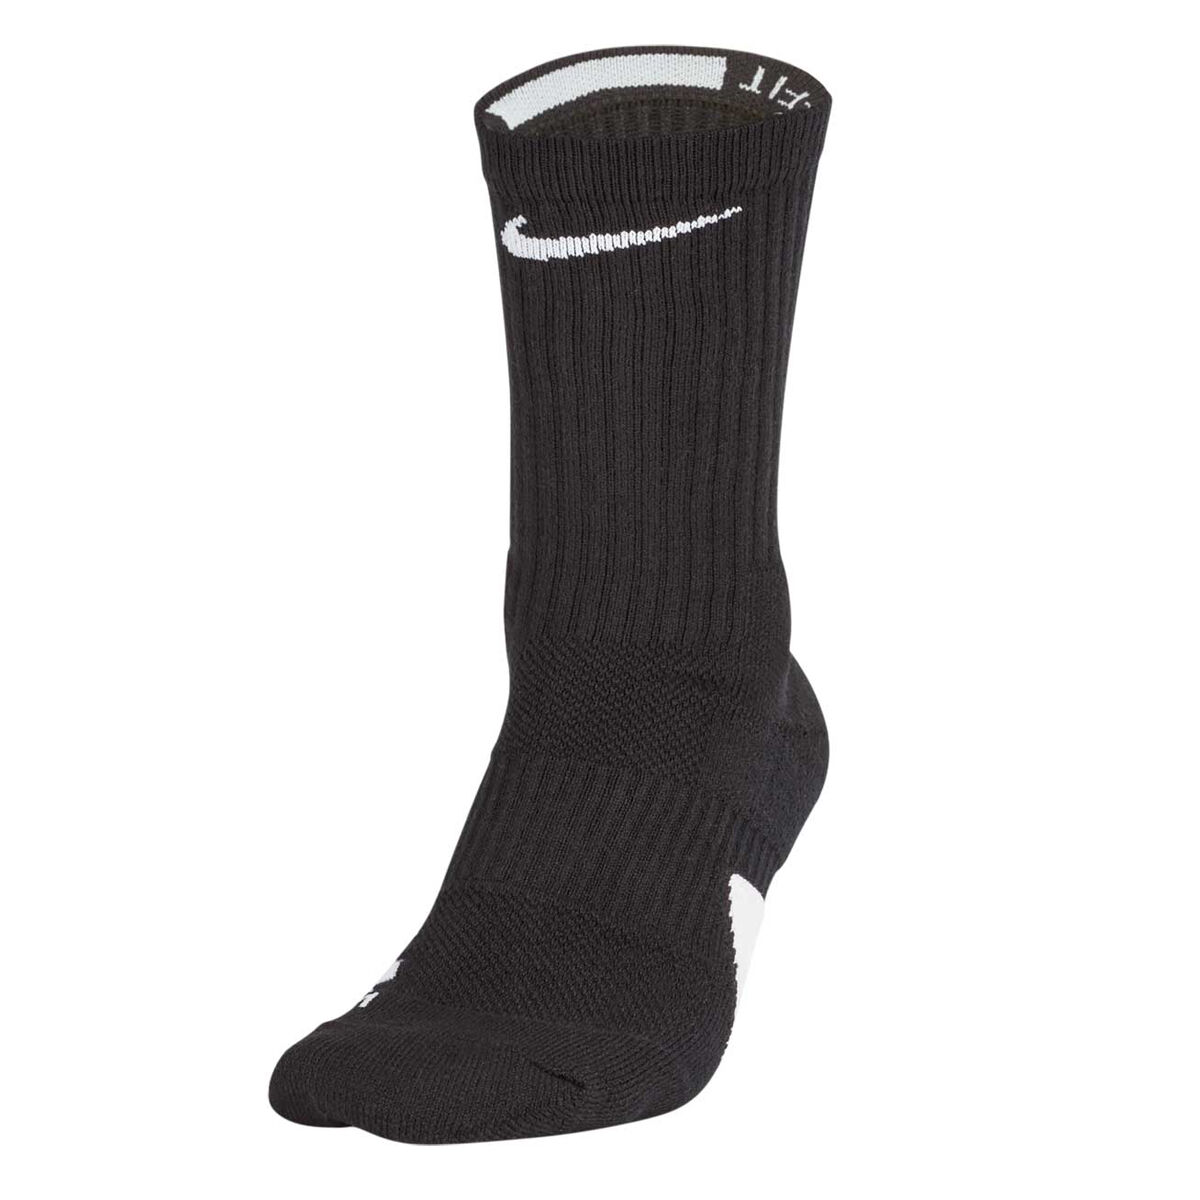 Sports Athletic Performance Compression Cushion Socks for Men and Women Huriman Elite Basketball Crew Socks 